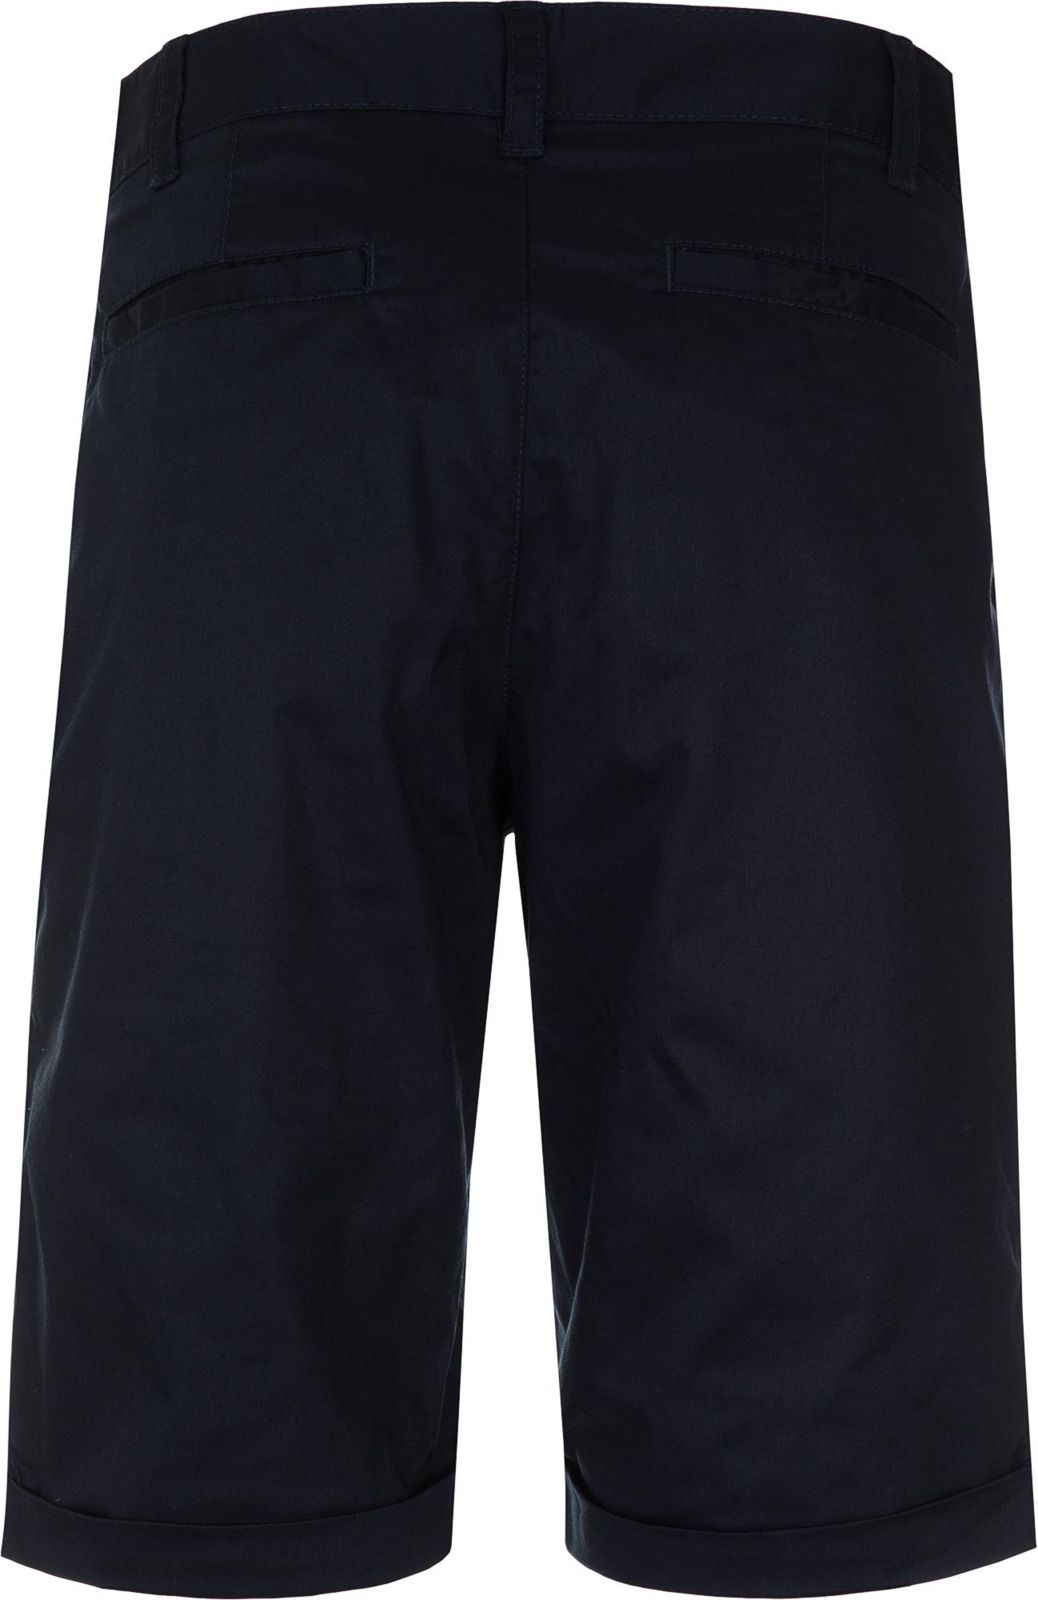   Fila Men's Shorts, : -. 100086-Z4.  XL (52)